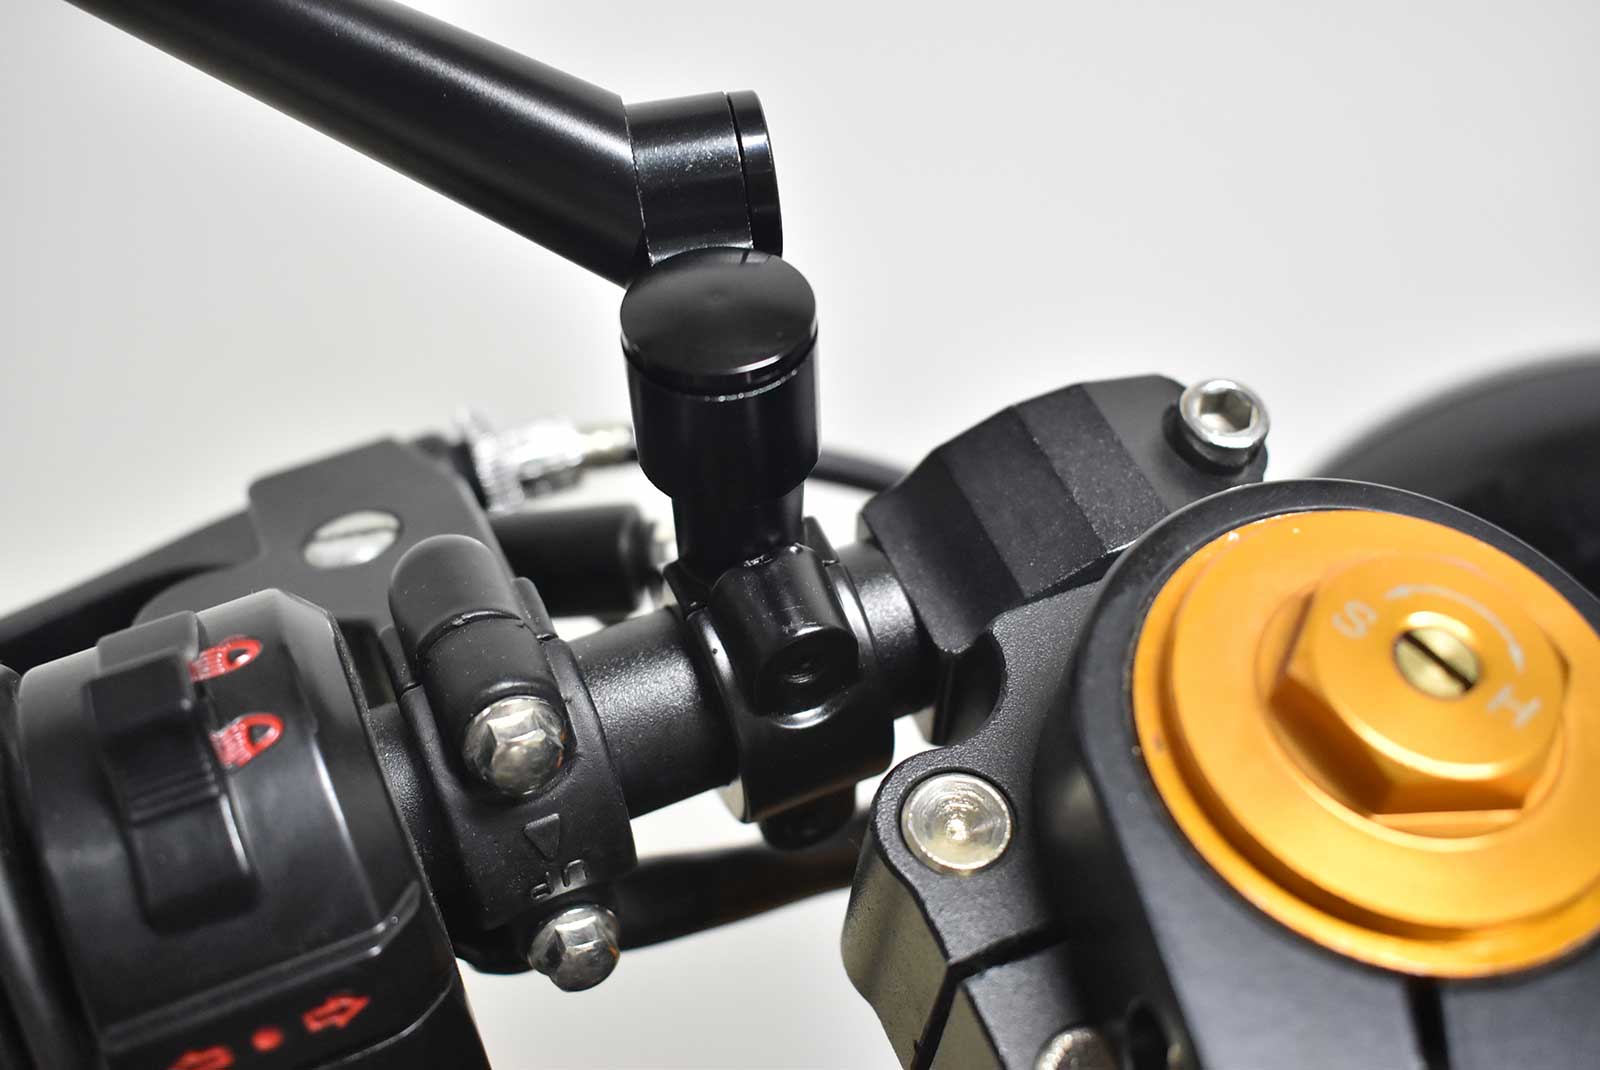 8mm Anti-Colockwise Black Motorcycle Mirror Mount Holder